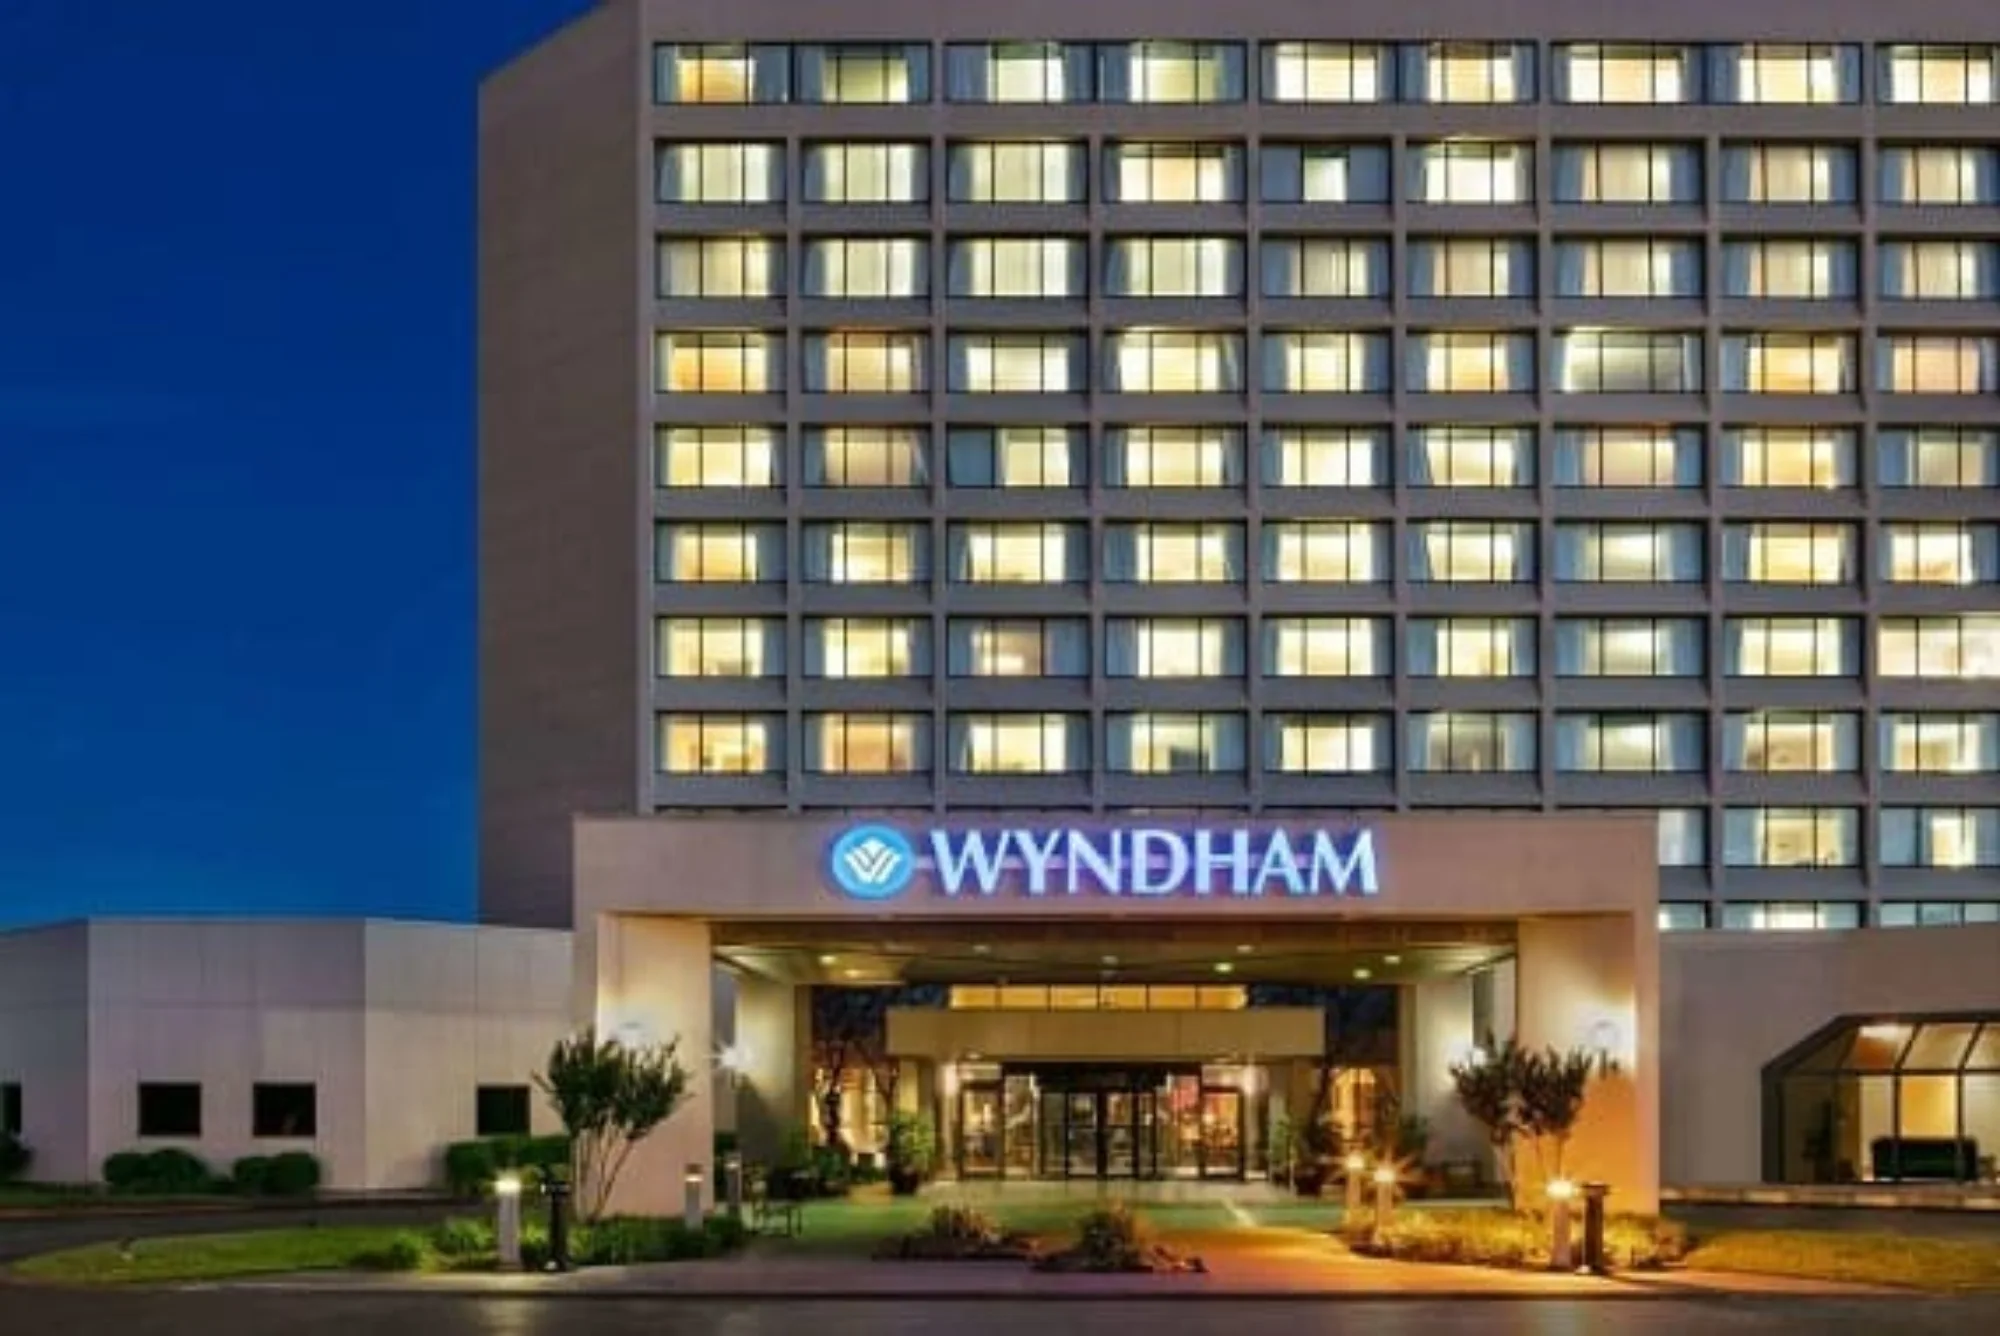 Bowo • Wyndham chaine d'hotel